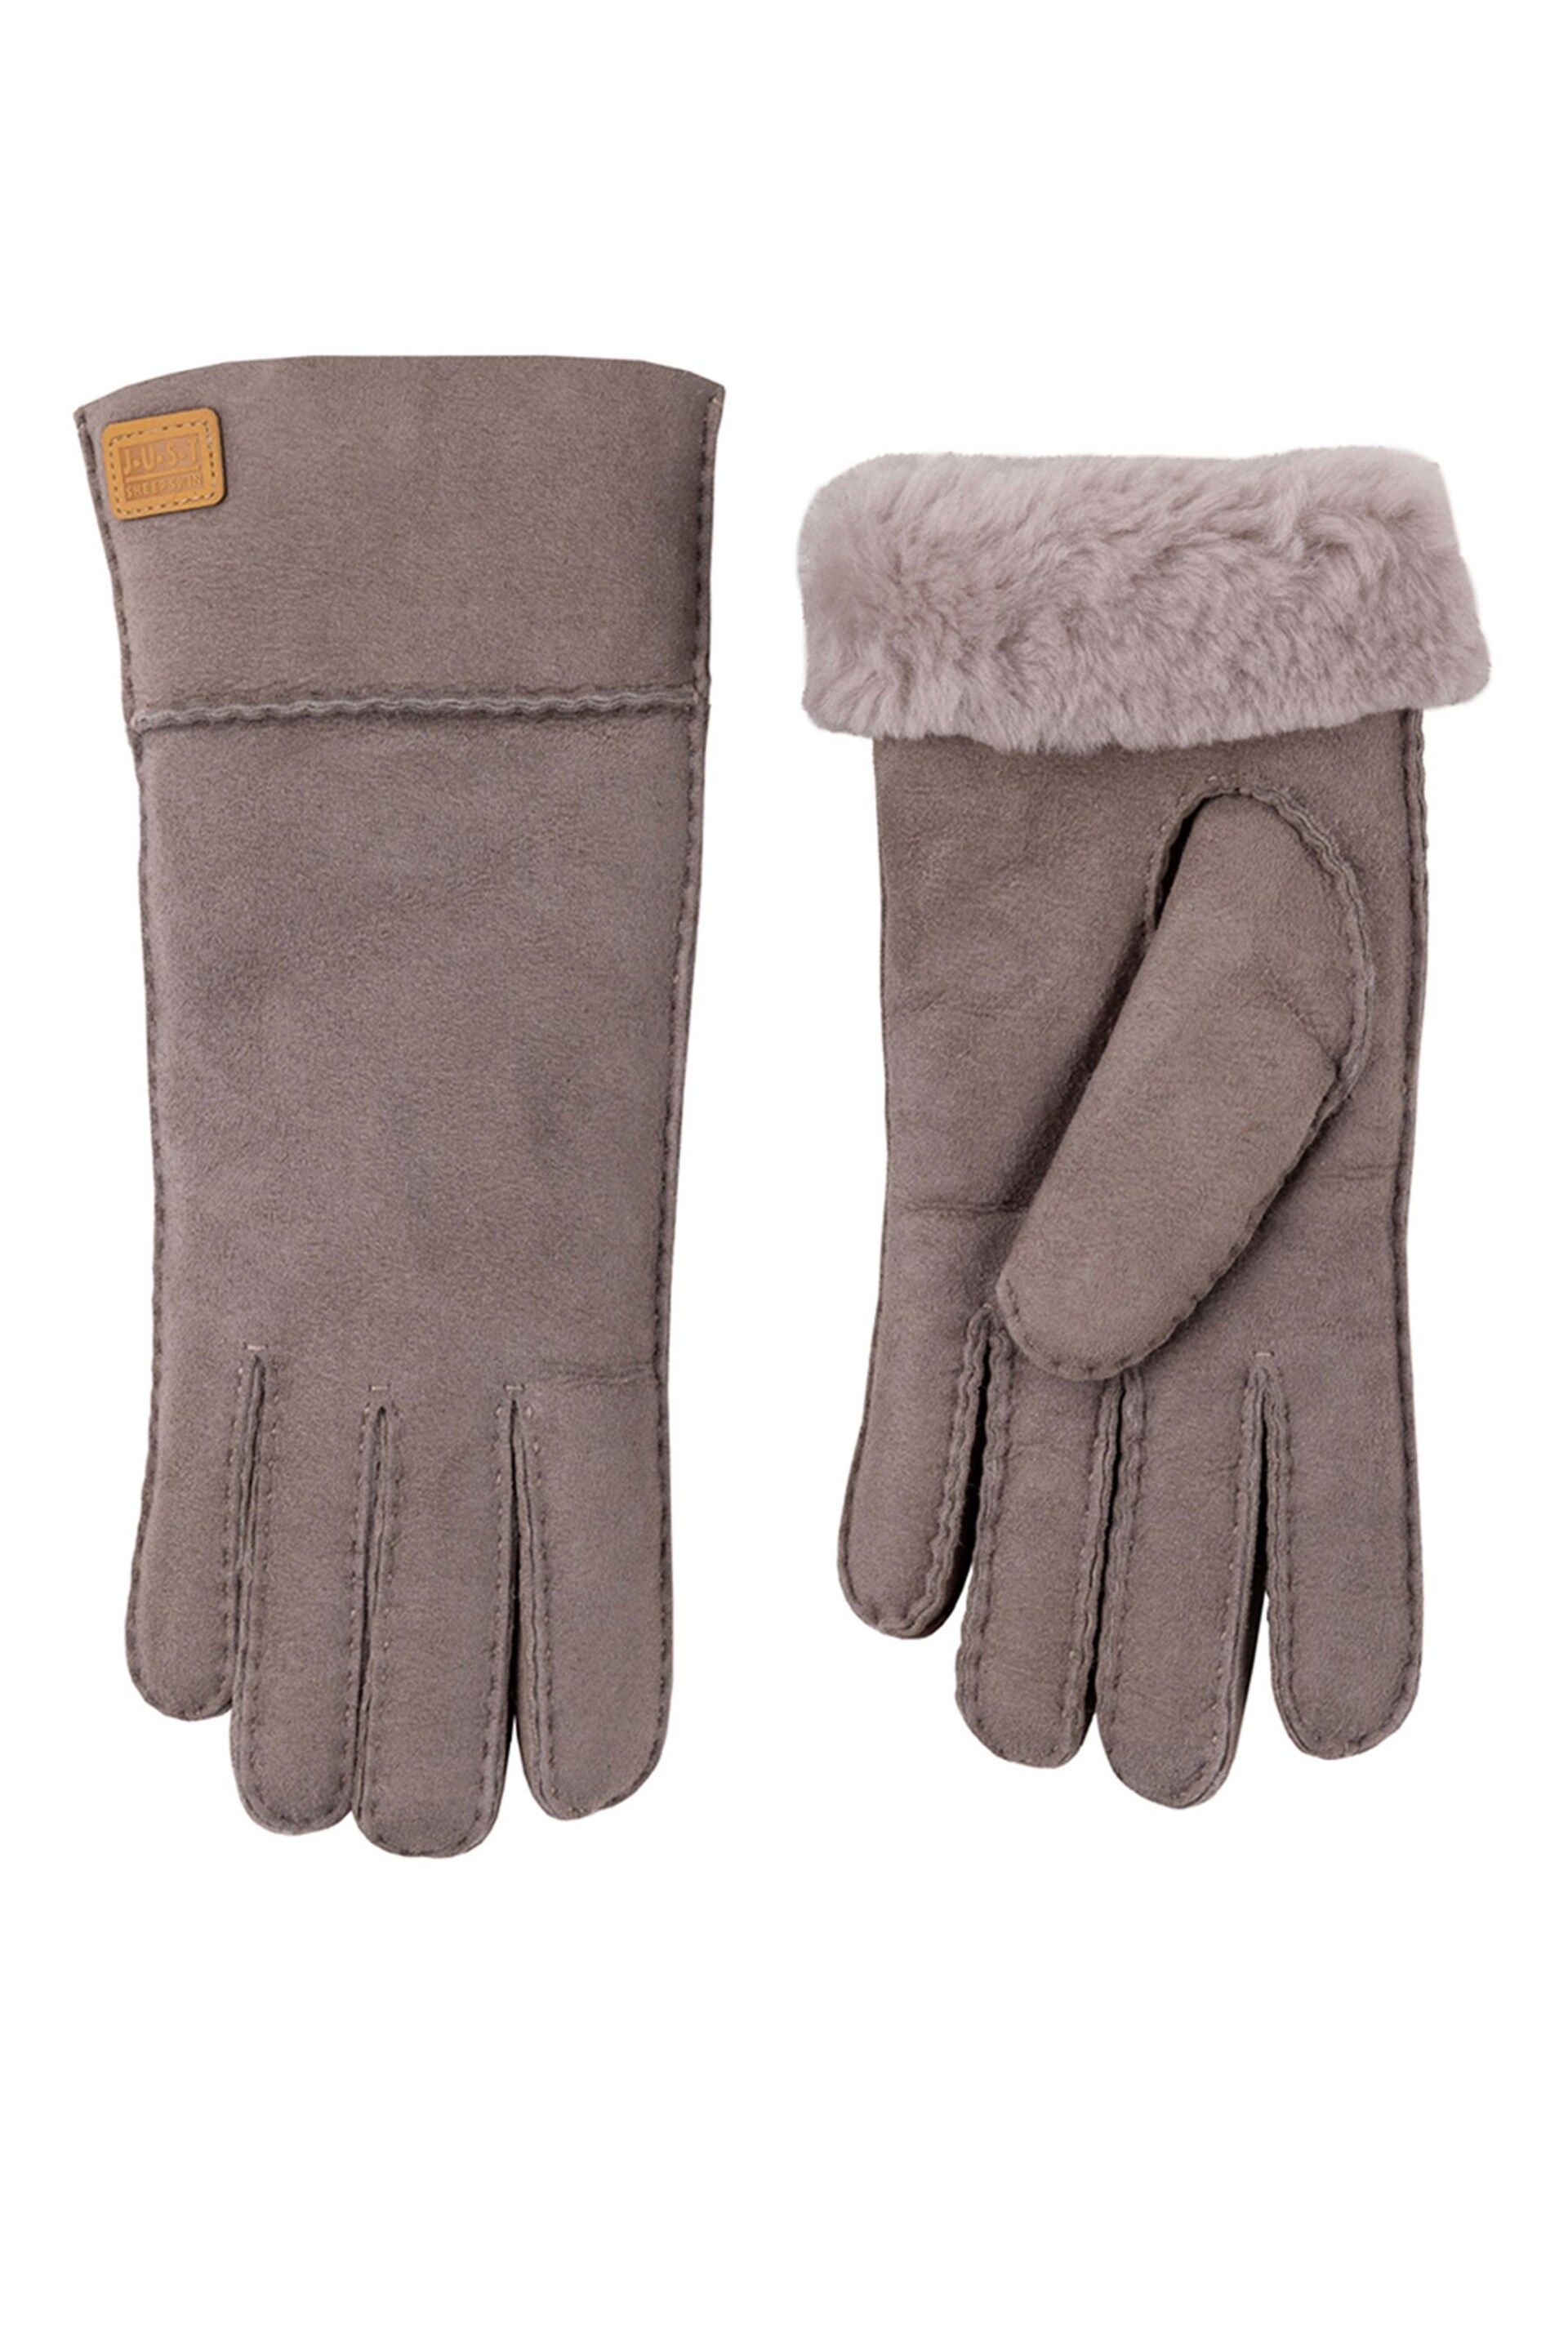 Just Sheepskin Grey Ladies Charlotte Sheepskin Gloves - Image 3 of 4